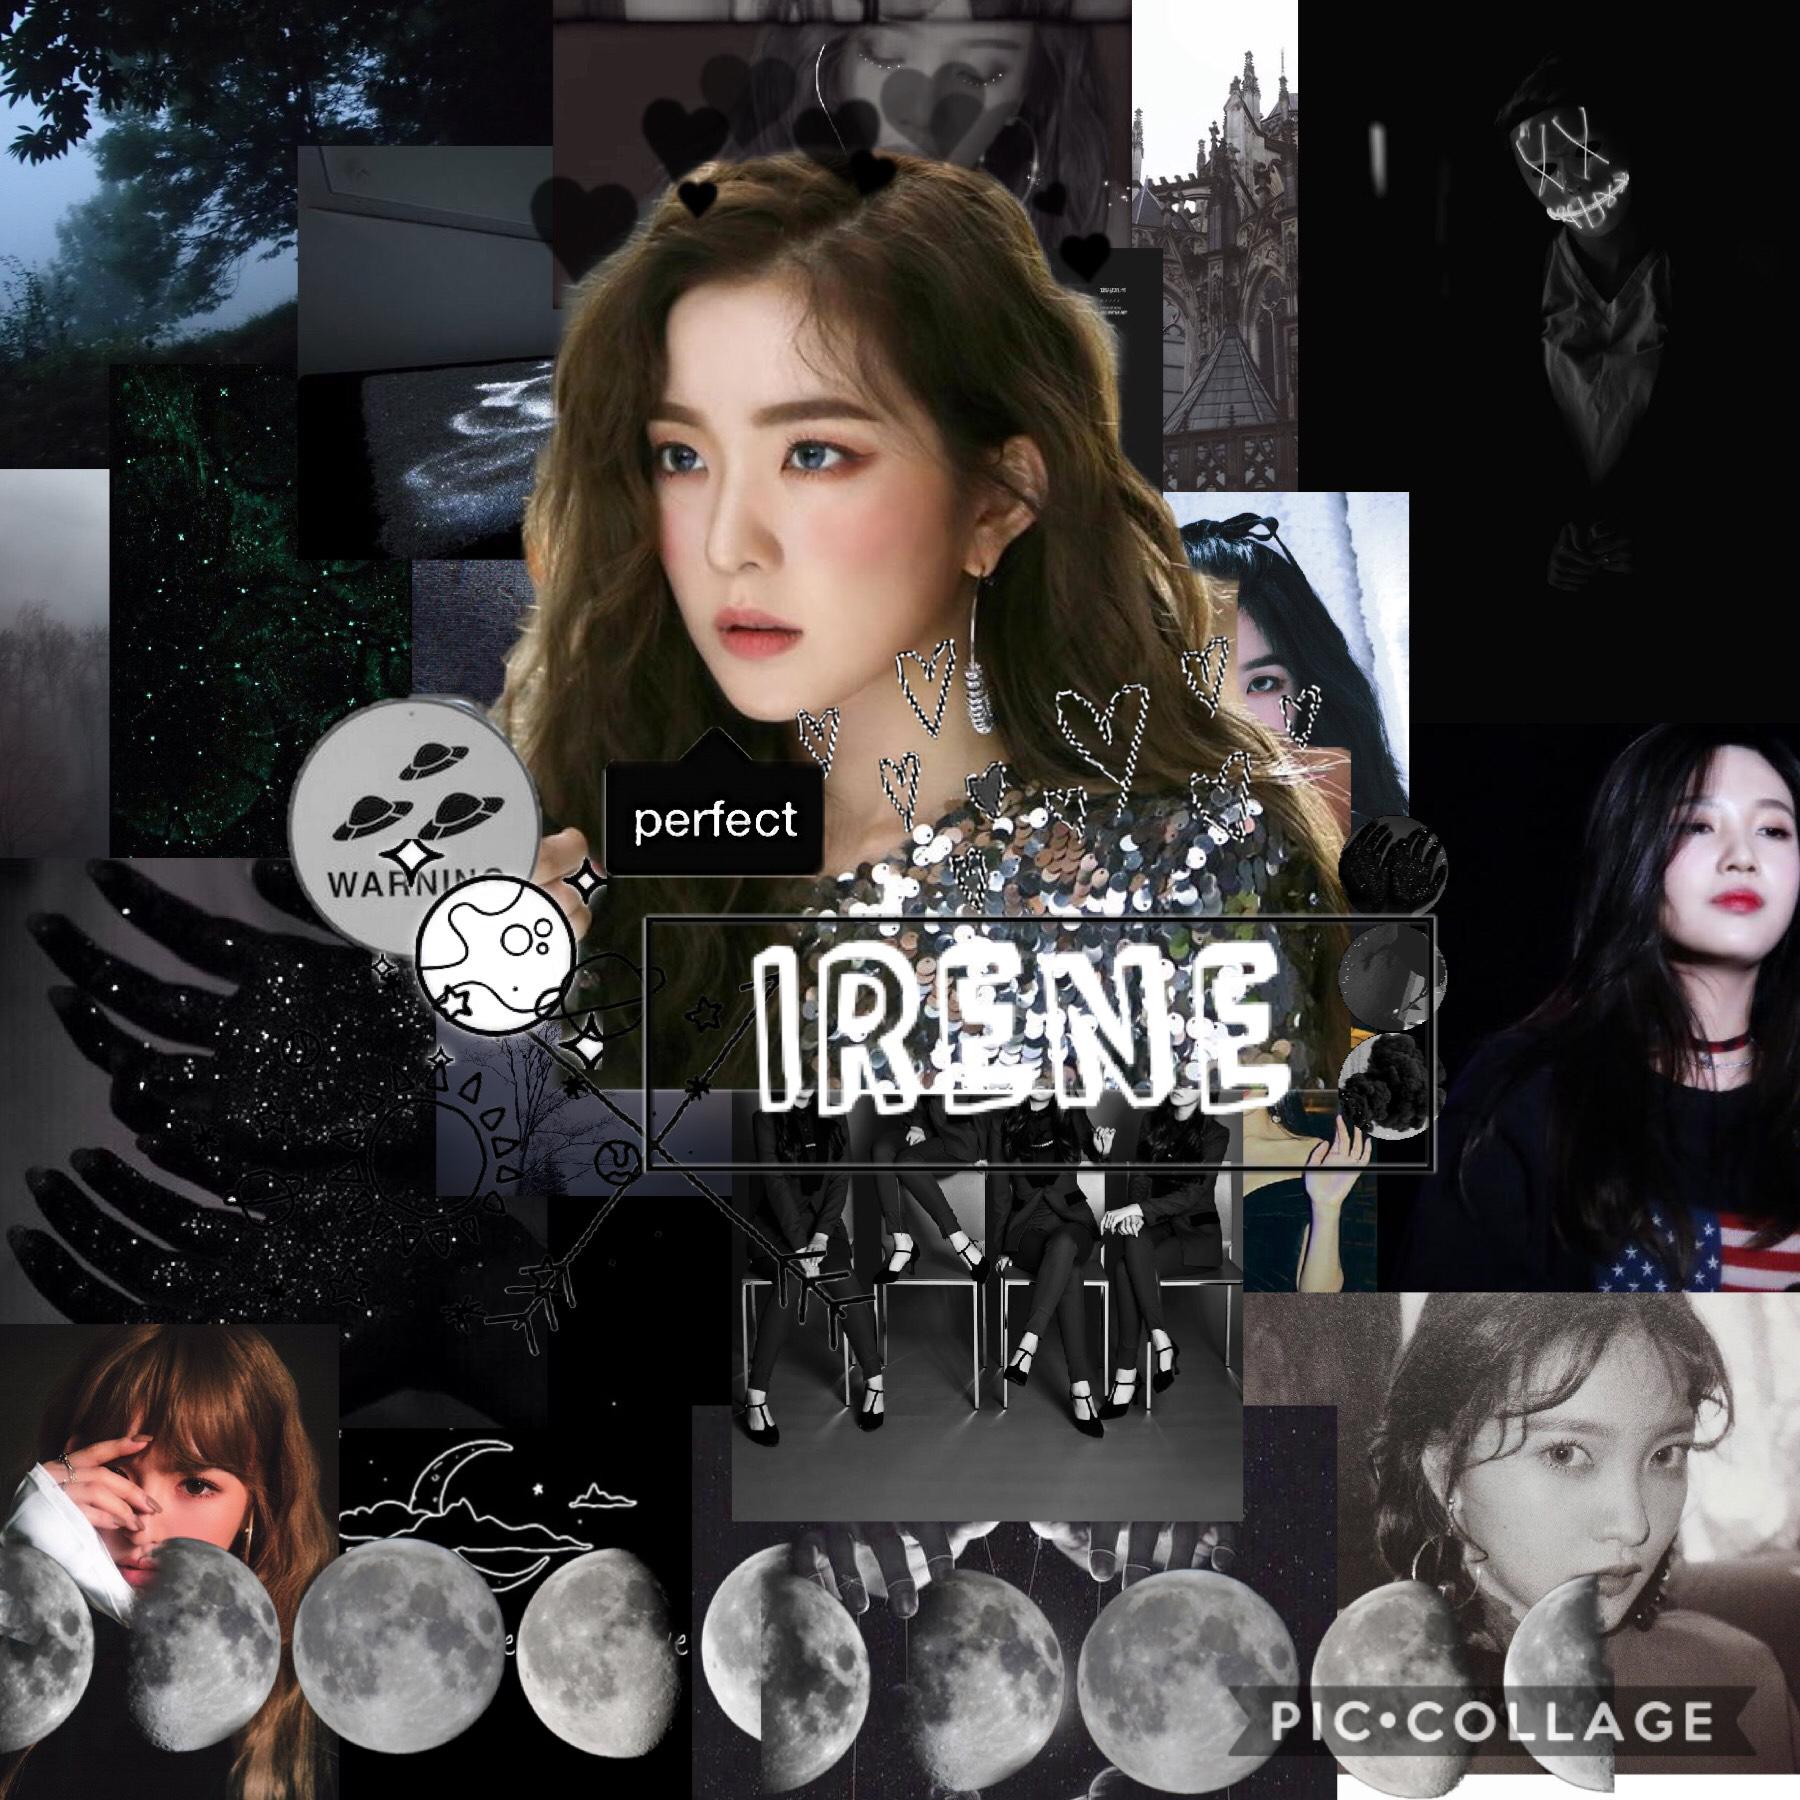 Irene is my RV bias ❤️ 